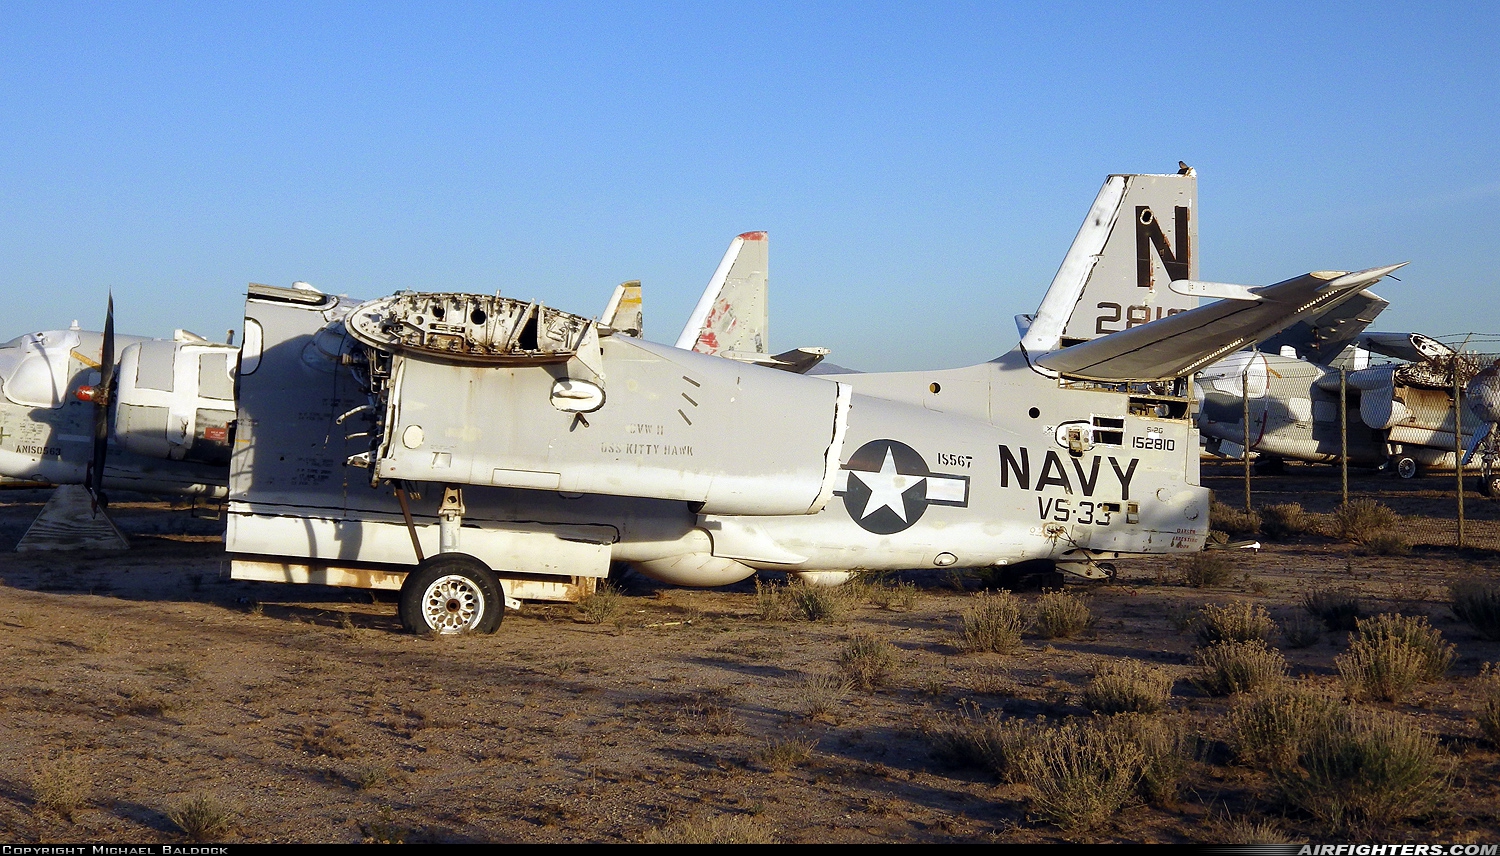 USA - Navy Grumman S-2G Tracker (G-121) 152810 at Tucson - Davis-Monthan AFB (DMA / KDMA), USA